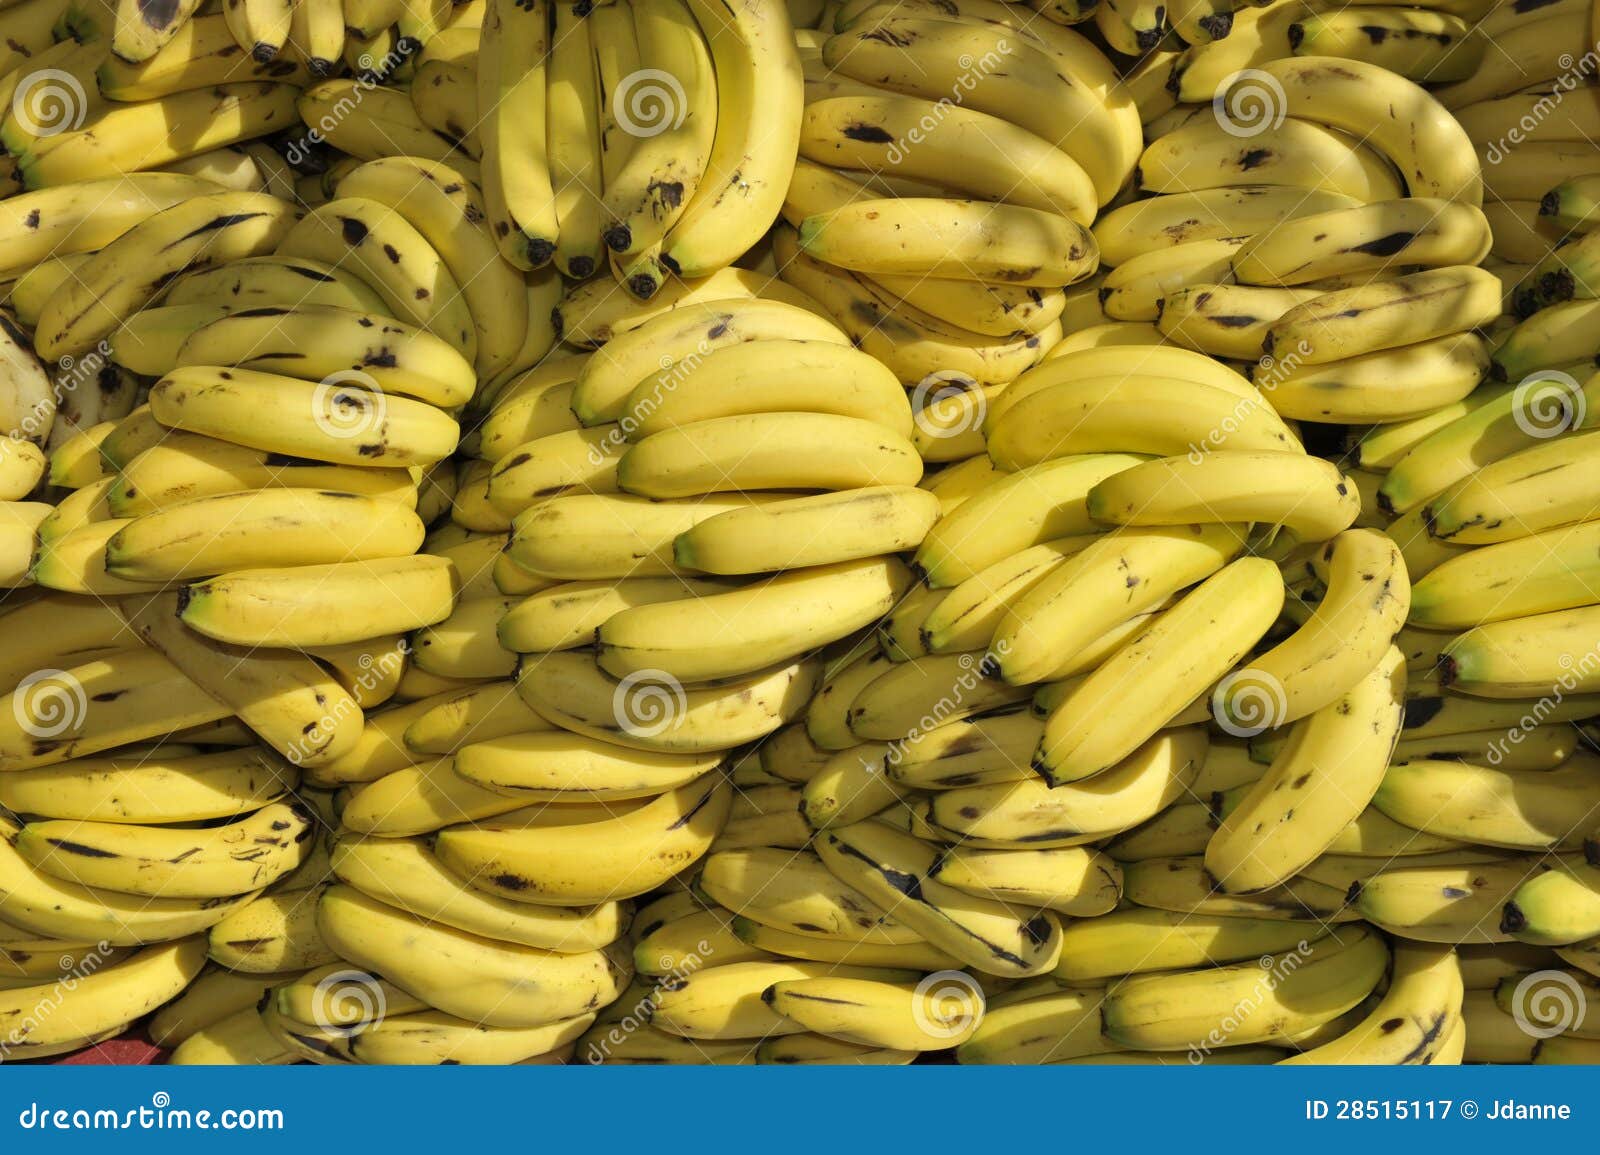 Pile Of Bananas Royalty Free Stock Photography - Image: 28515117